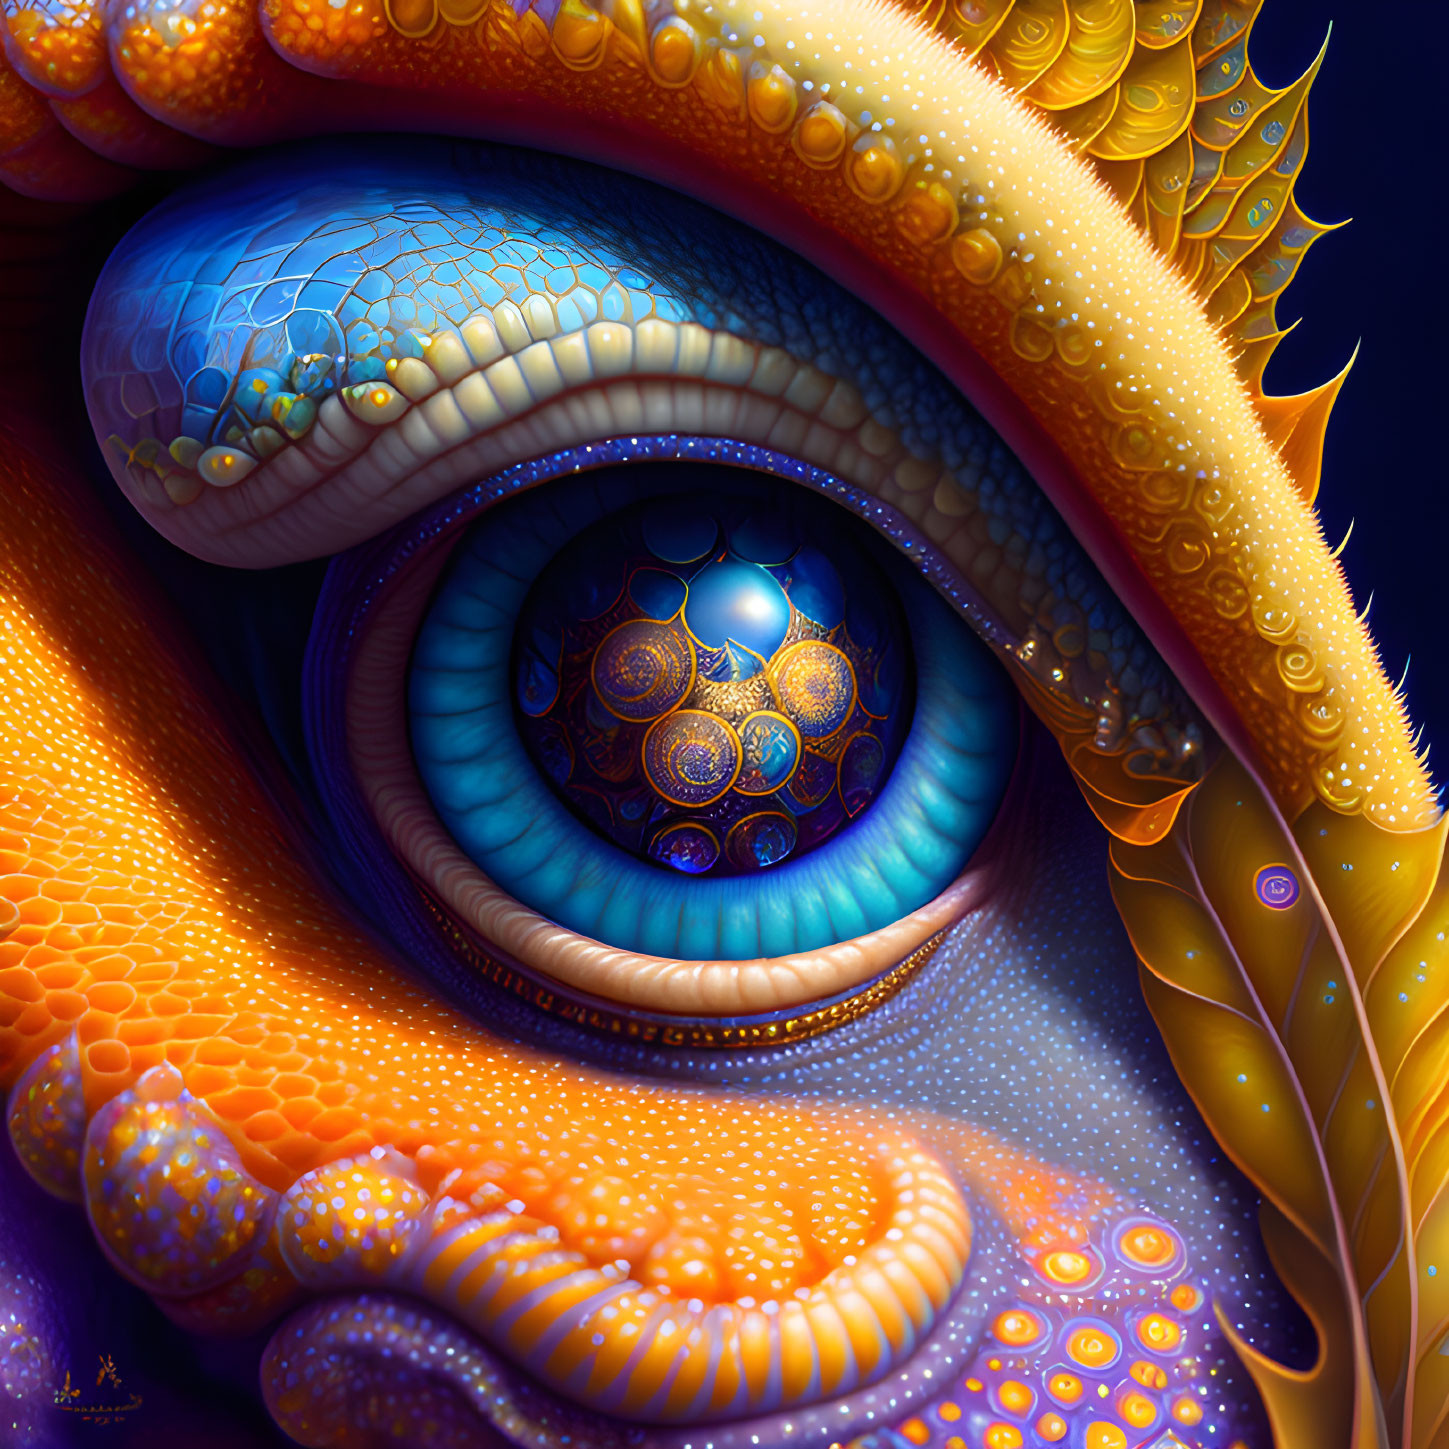 Detailed fantastical eye illustration in vivid blue, orange, and yellow